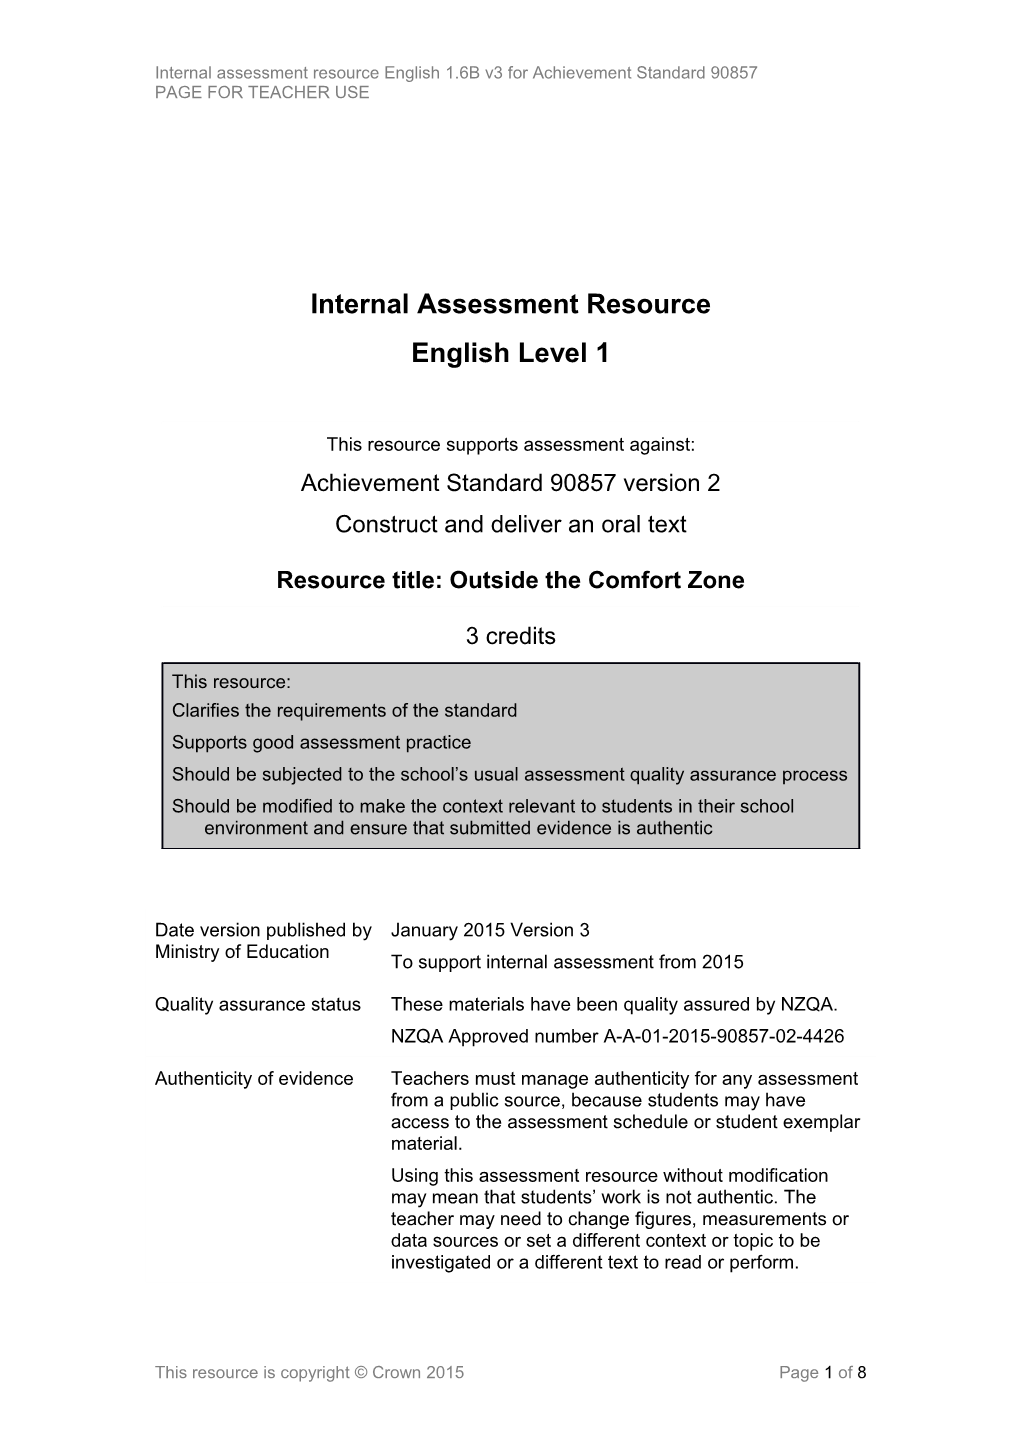 Level 1 English Internal Assessment Resource s5